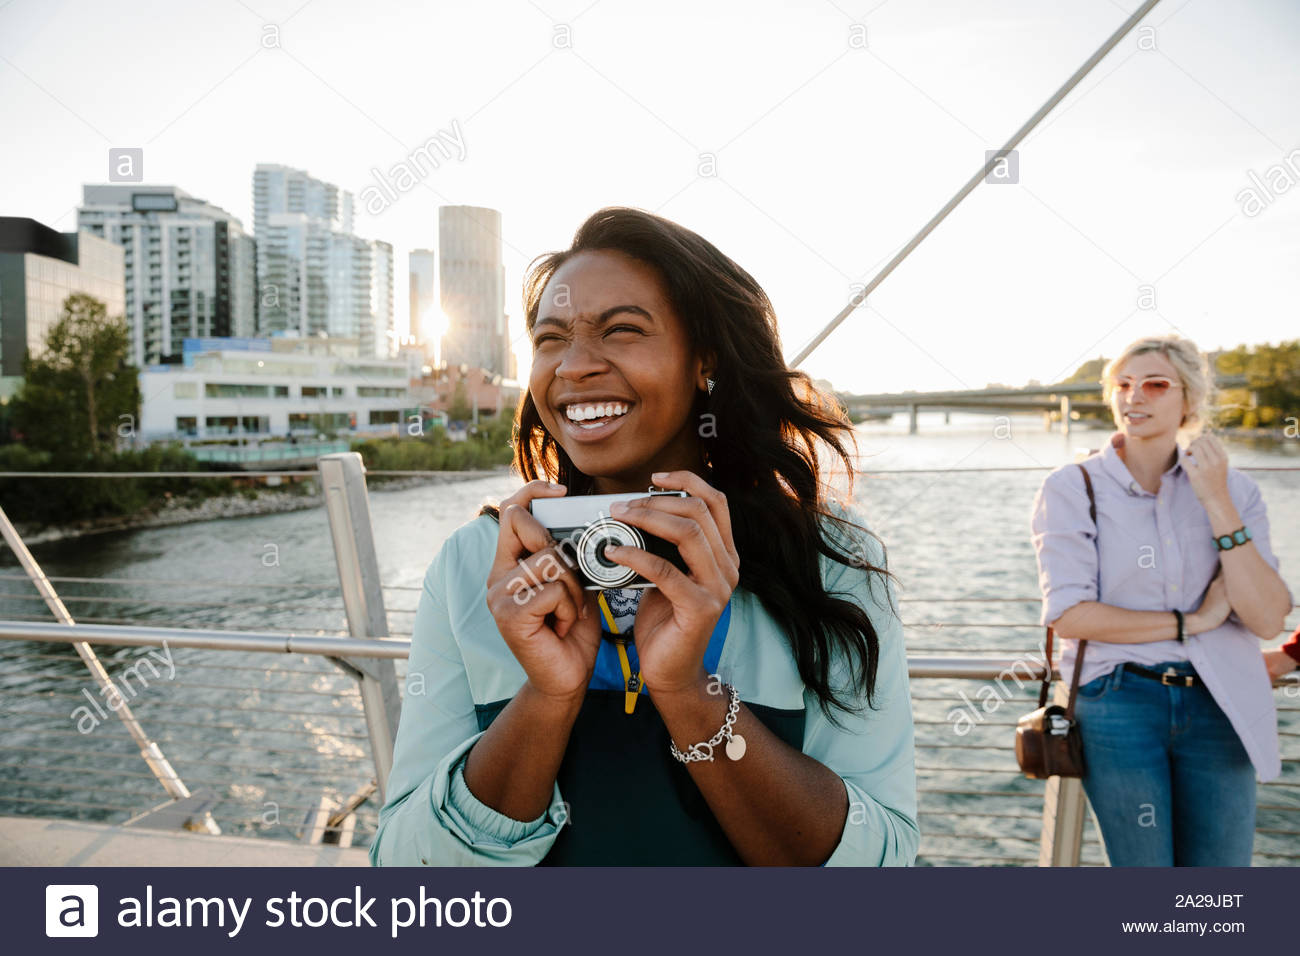 Playful young woman with retro camera on sunny, urban bridge Stock Photo